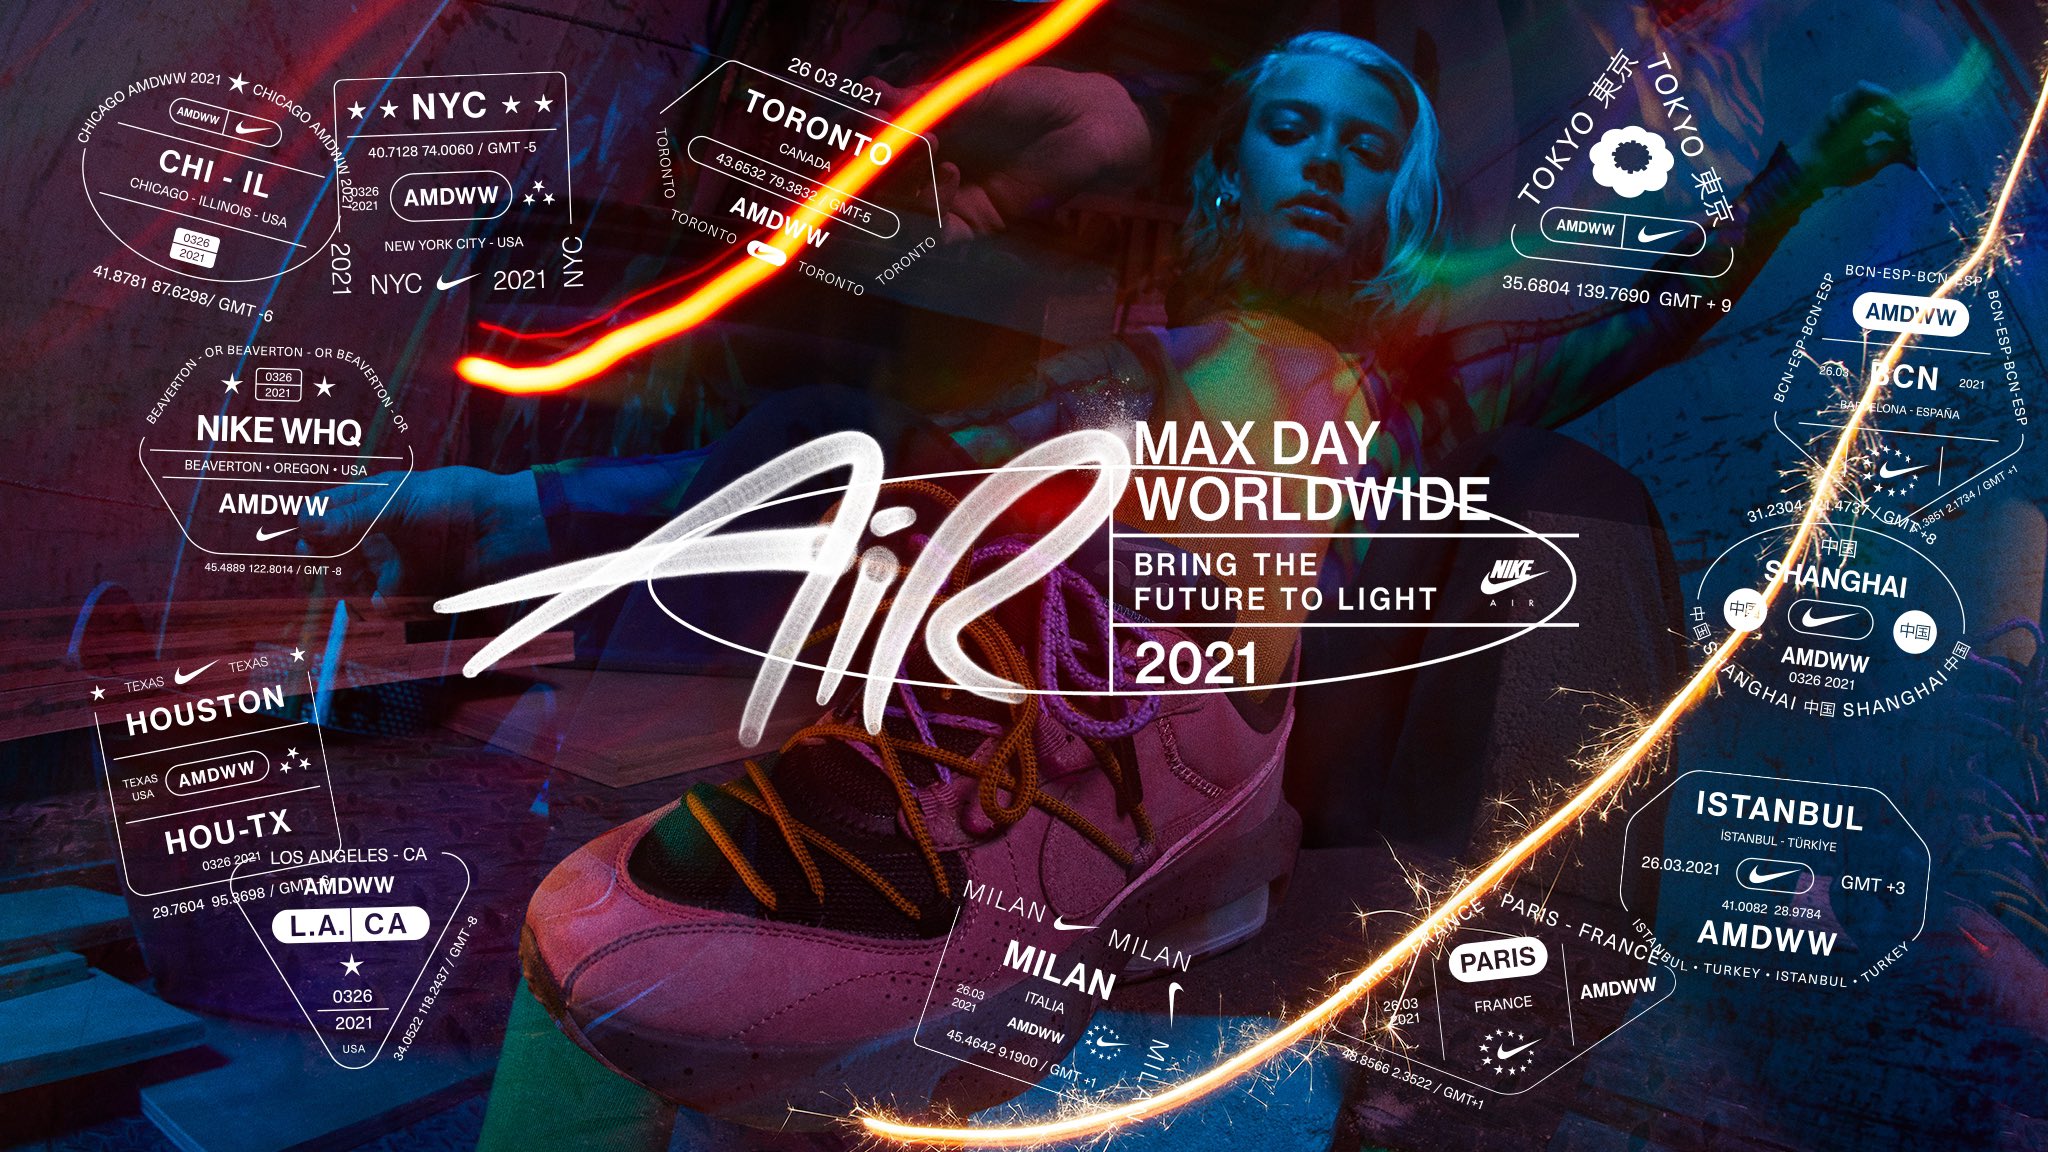 kiwi Eslovenia apretado US11 on Twitter: "Air Max Day Worldwide 2021 - Nike News  https://t.co/k4Bjp9gVdf https://t.co/kjxYOoYusV" / Twitter